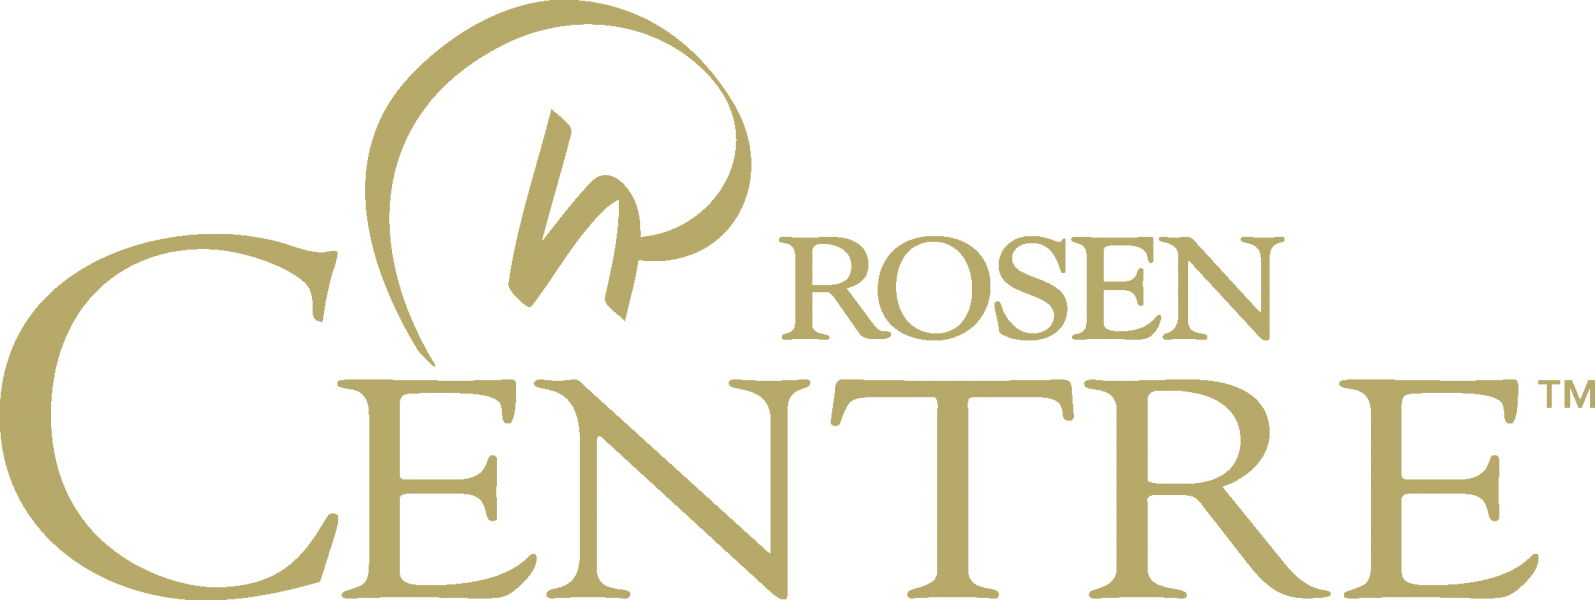 Rosen Logo - Press Logos. Rosen Centre Hotel